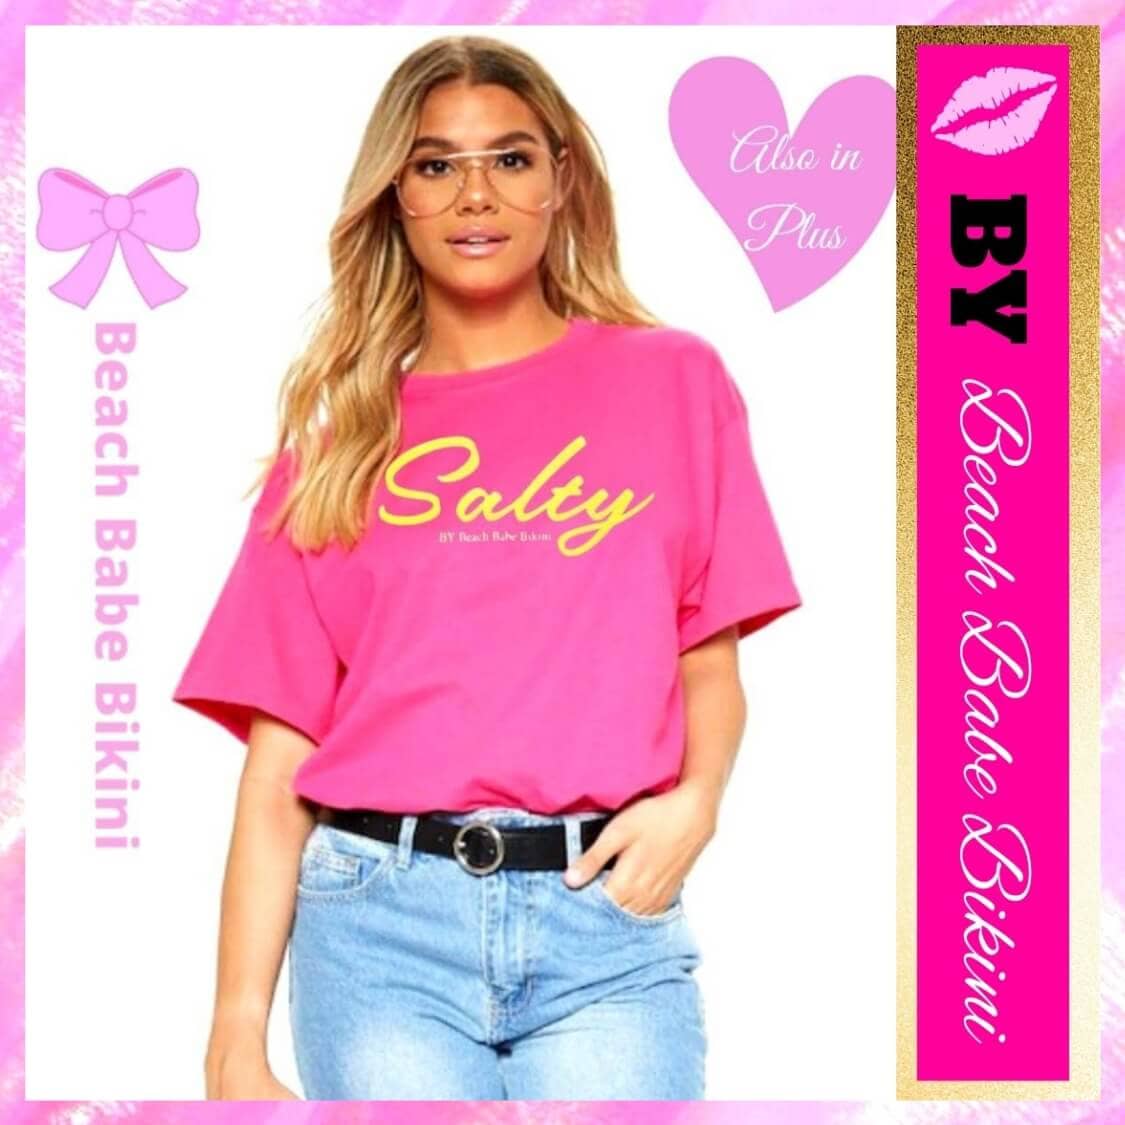 Salty BY Beach Babe Bikini Tee, Hot Pink T-Shirt, Hot pink tee, bright pink